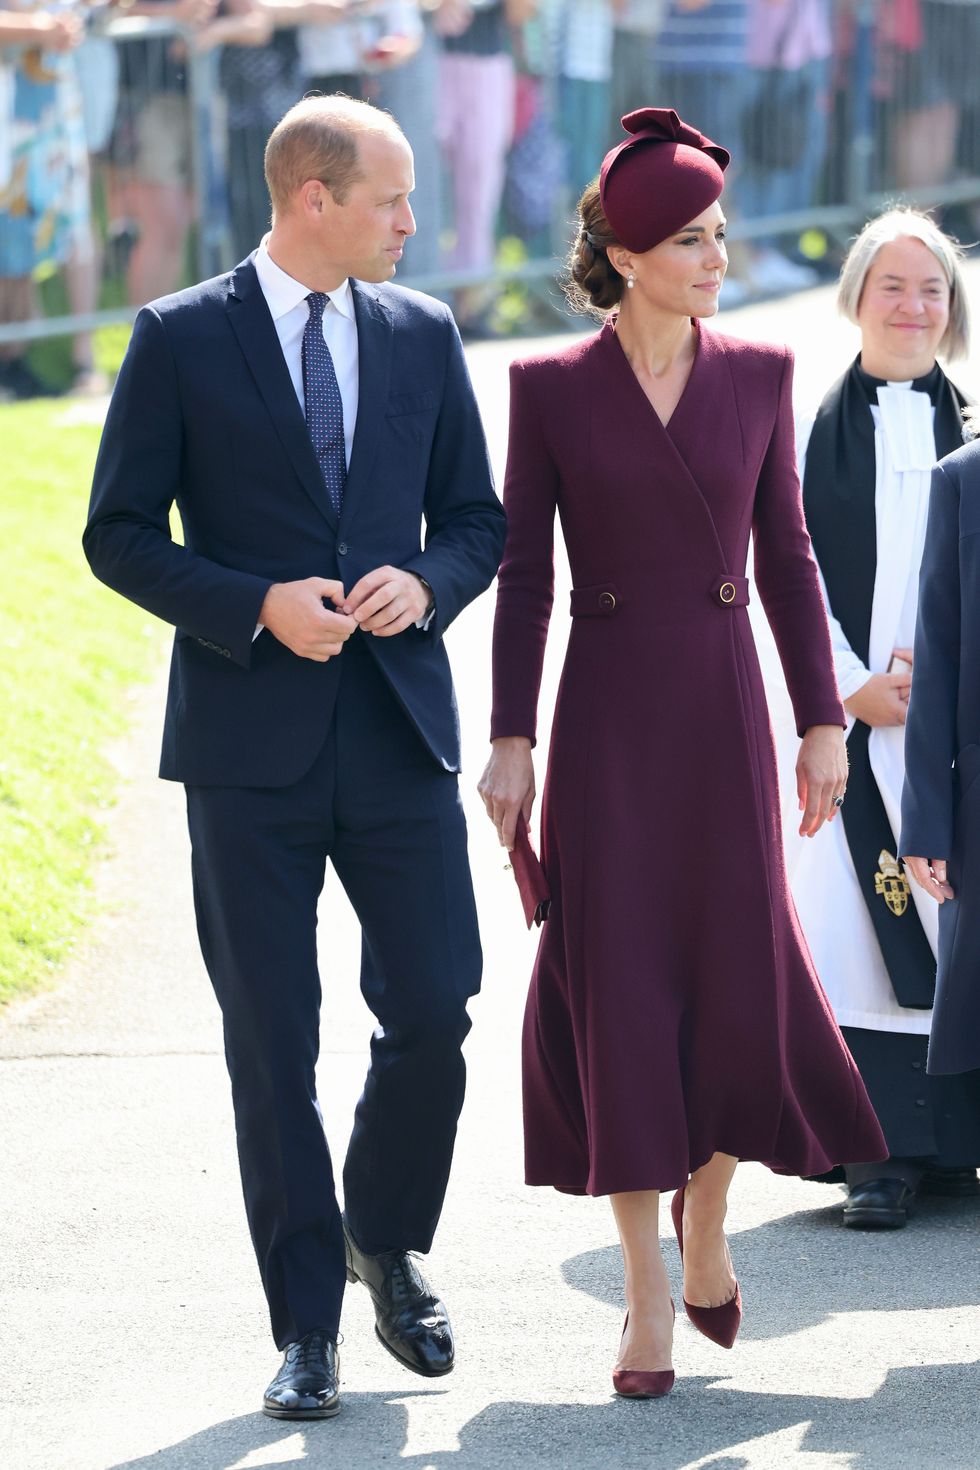 Prince William and Princess Kate Mark Queen Elizabeth's Death Anniversary